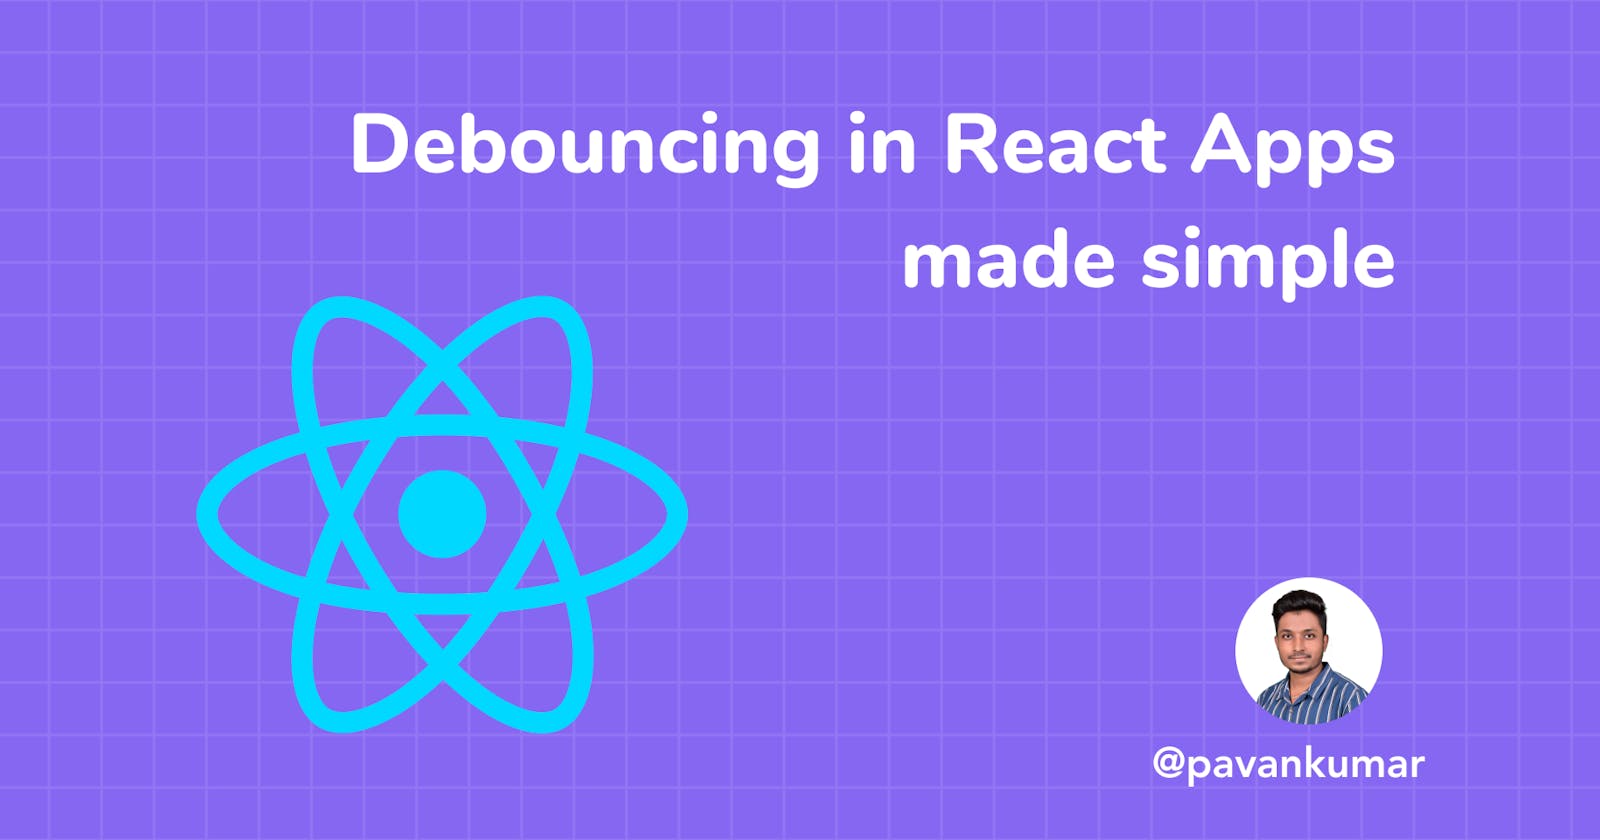 Debouncing in React Apps made simple